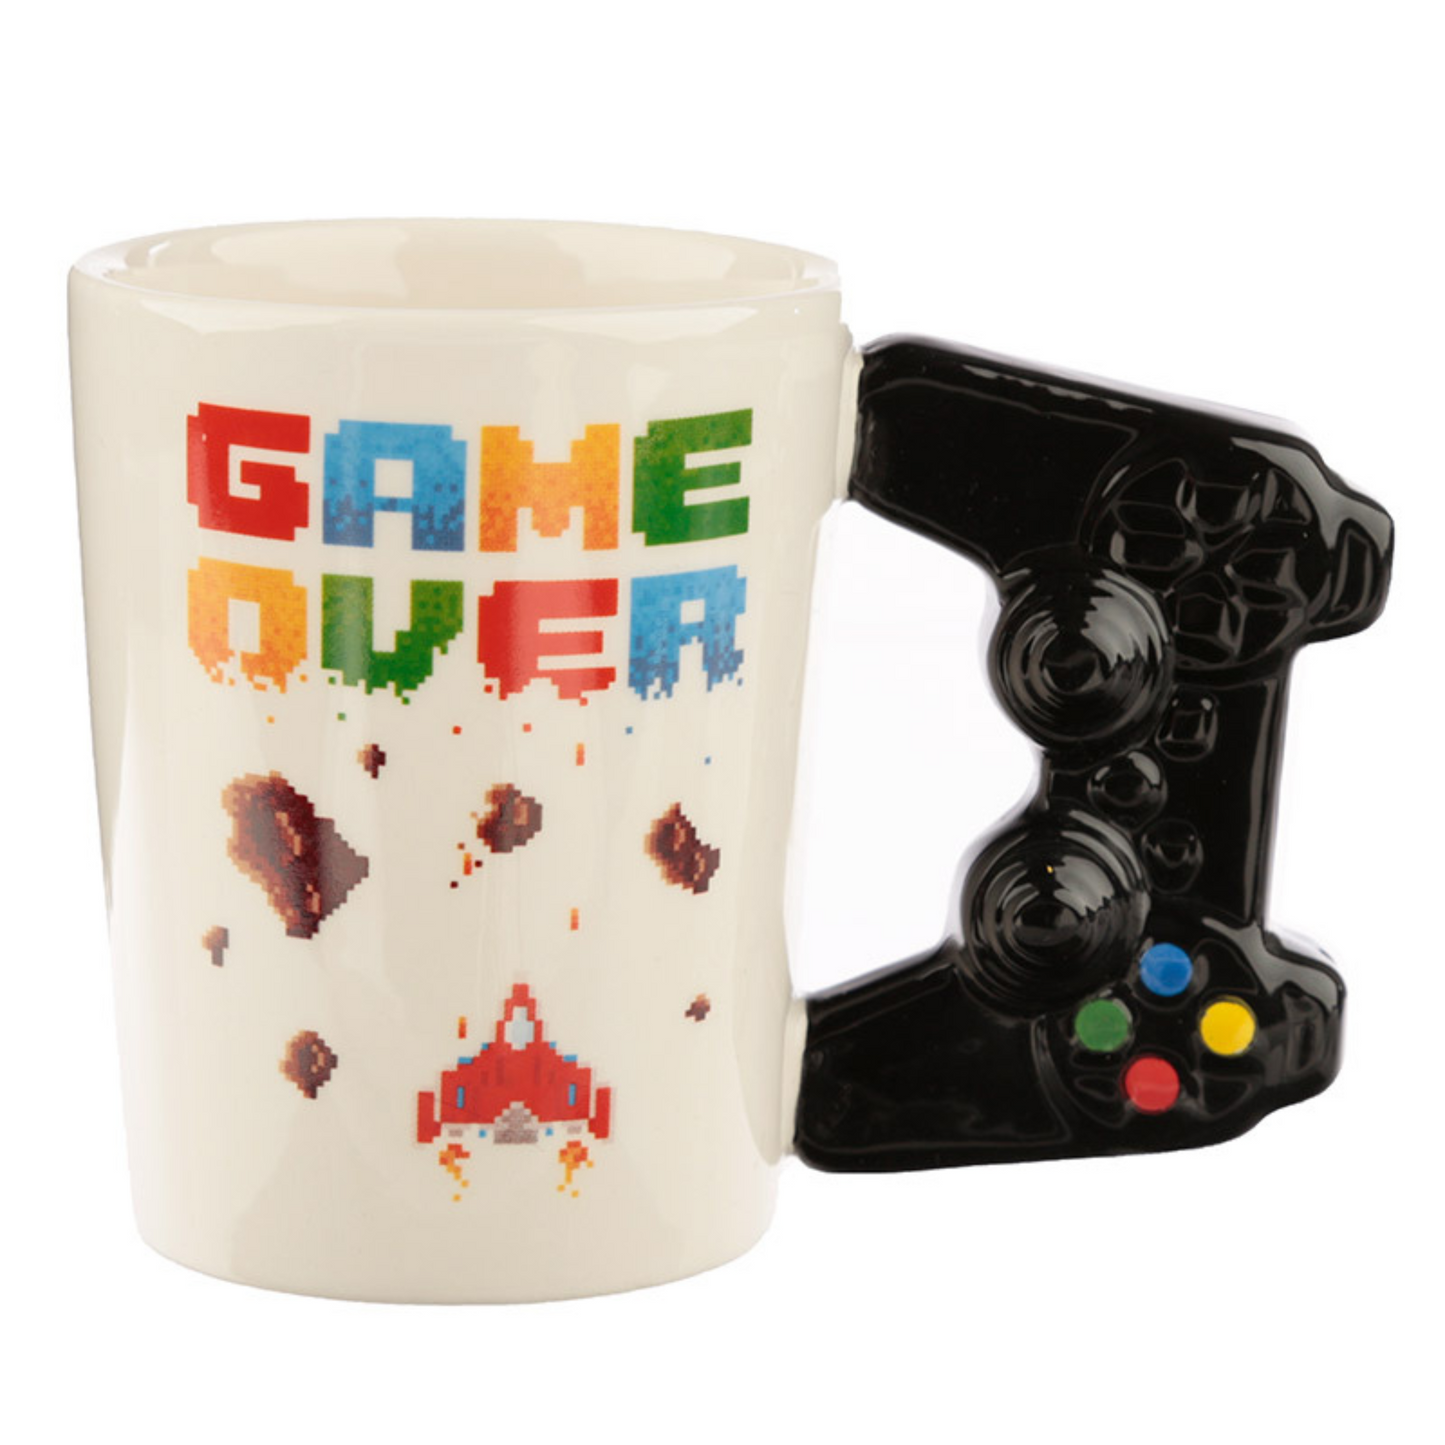 Ceramic Gamer Mug with Joypad Handle